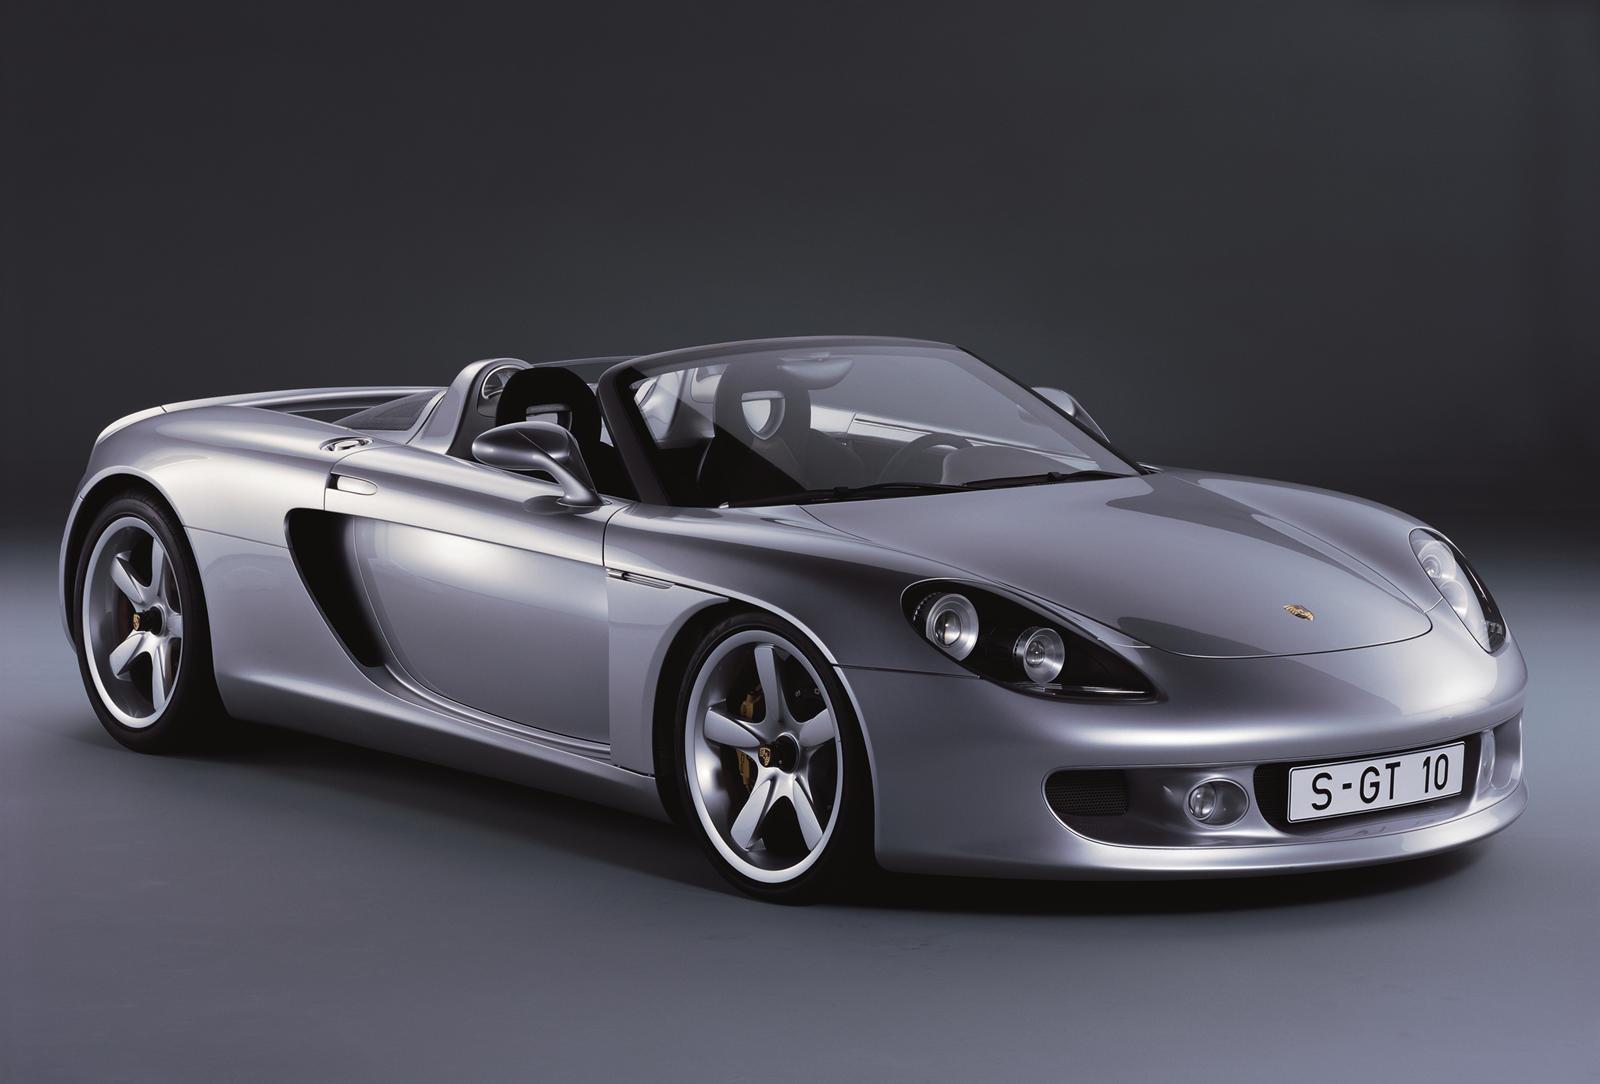 Porsche Carrera GT – Đỉnh cao kỹ thuật hay cỗ máy chết chóc? - CafeAuto.Vn